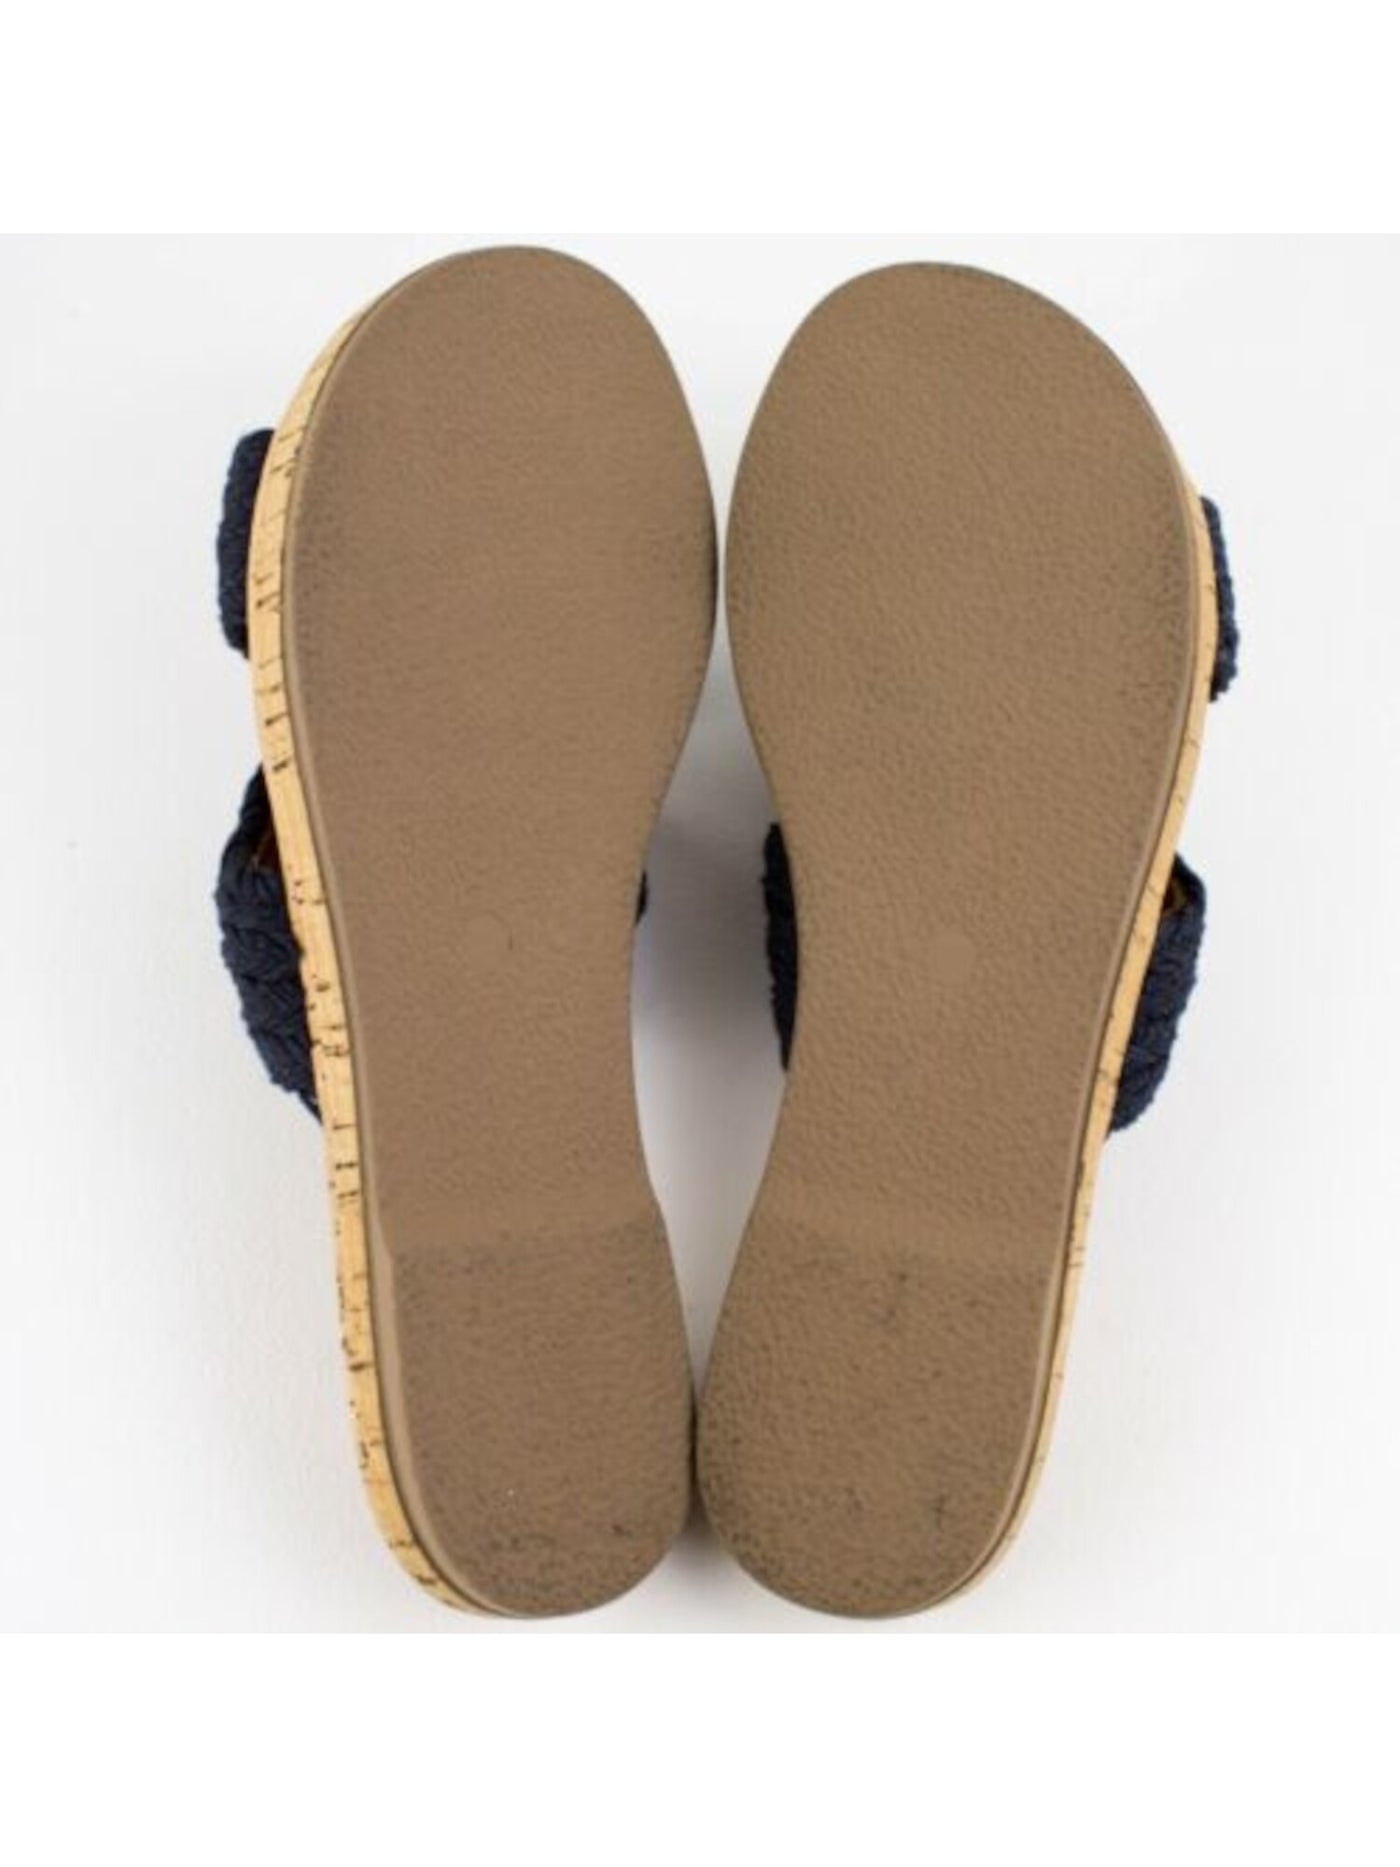 SPLENDID Womens Navy Comfort Braided Suzette Round Toe Platform Slip On Slide Sandals Shoes 9